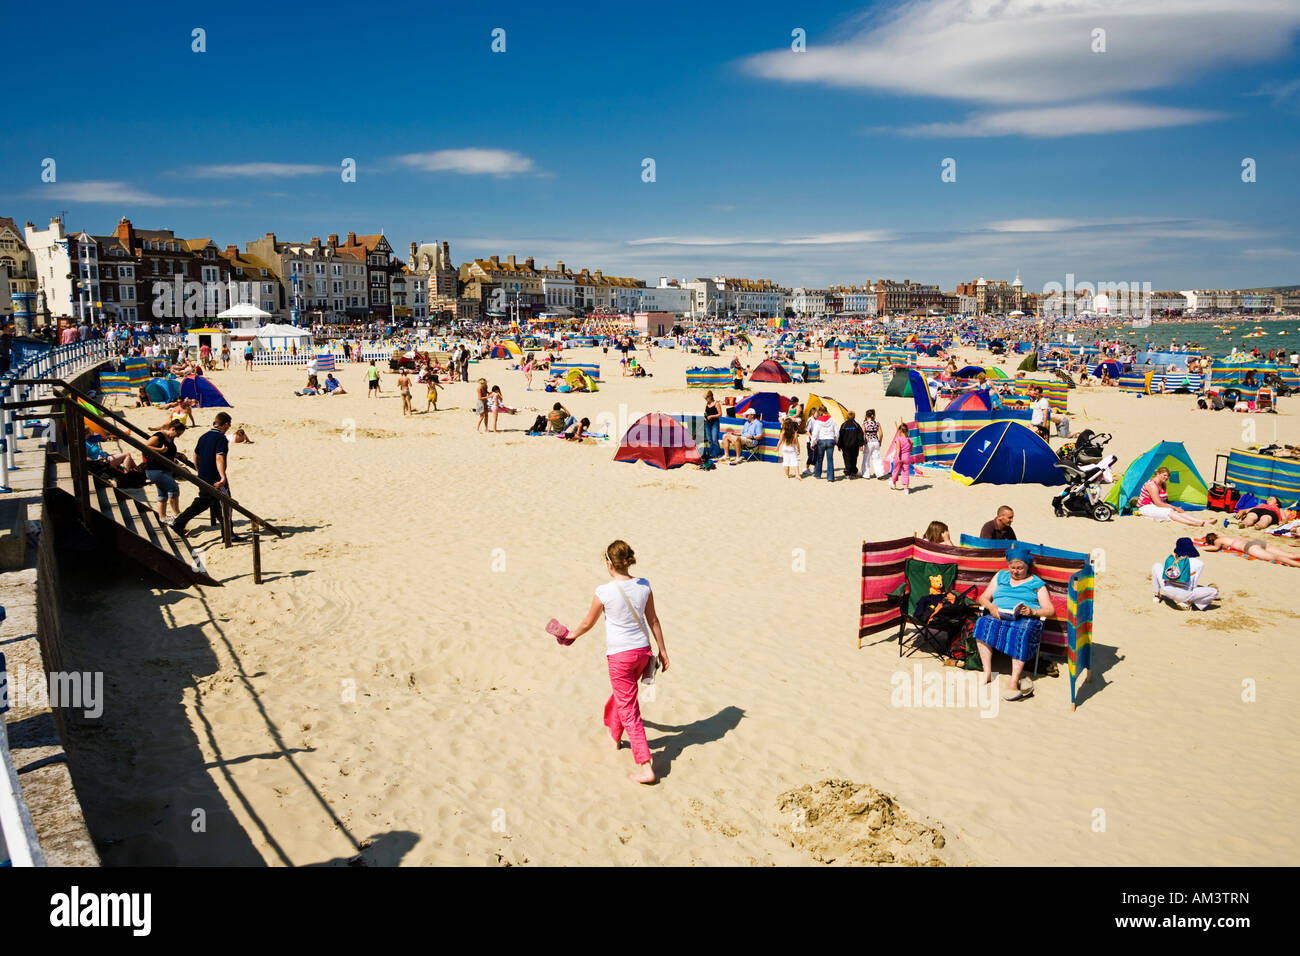 People sunbathing on Weymouth beach in summer, Dorset coast, England, UK Stock Photo